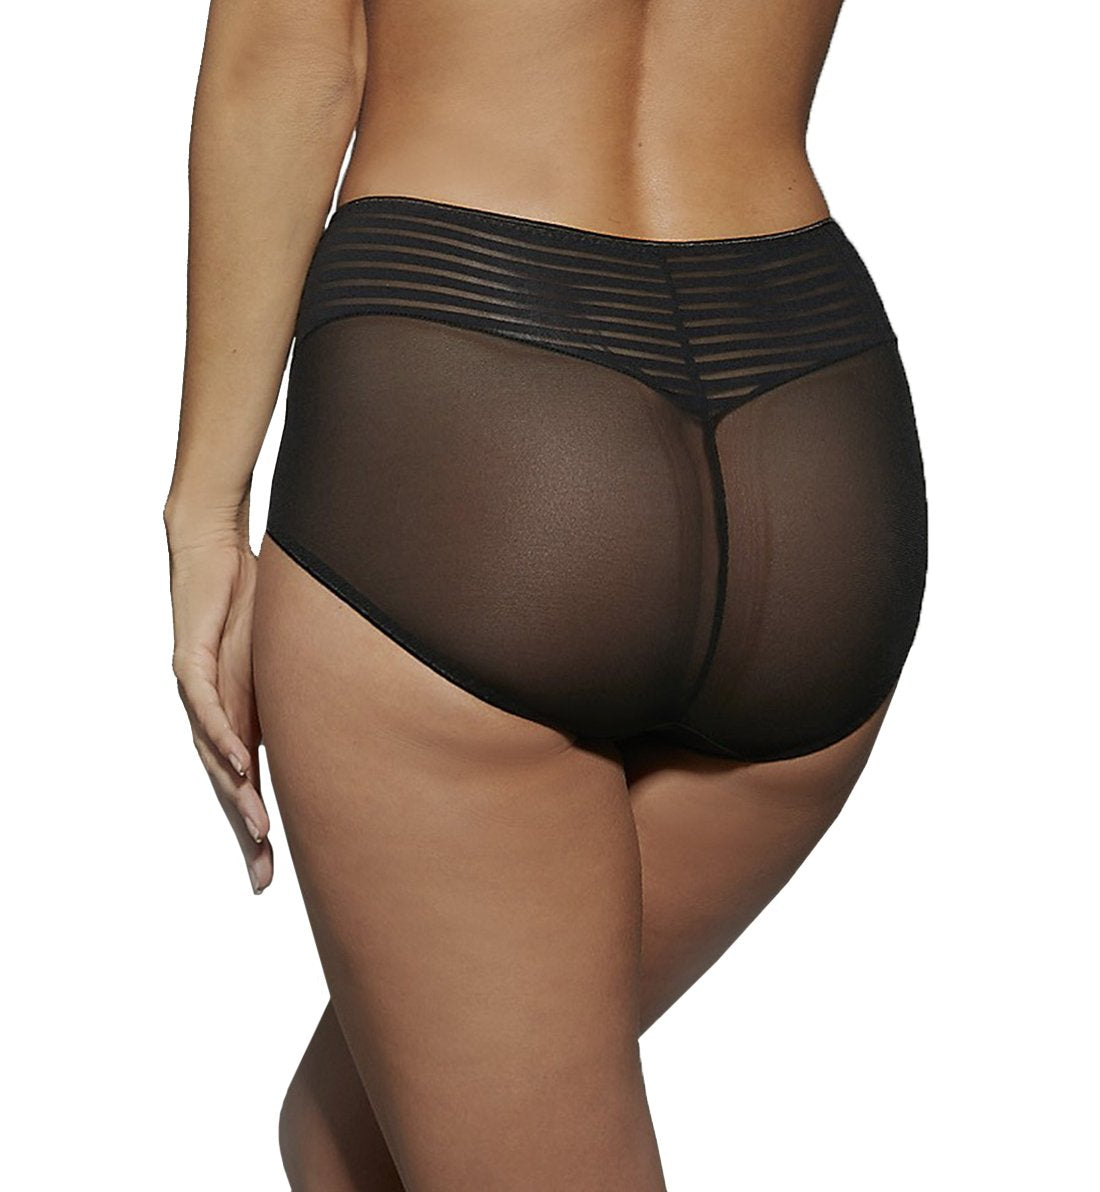 Comexim Gloria Matching Panty (CMGLORIAMP),Medium,Black - Black,Medium